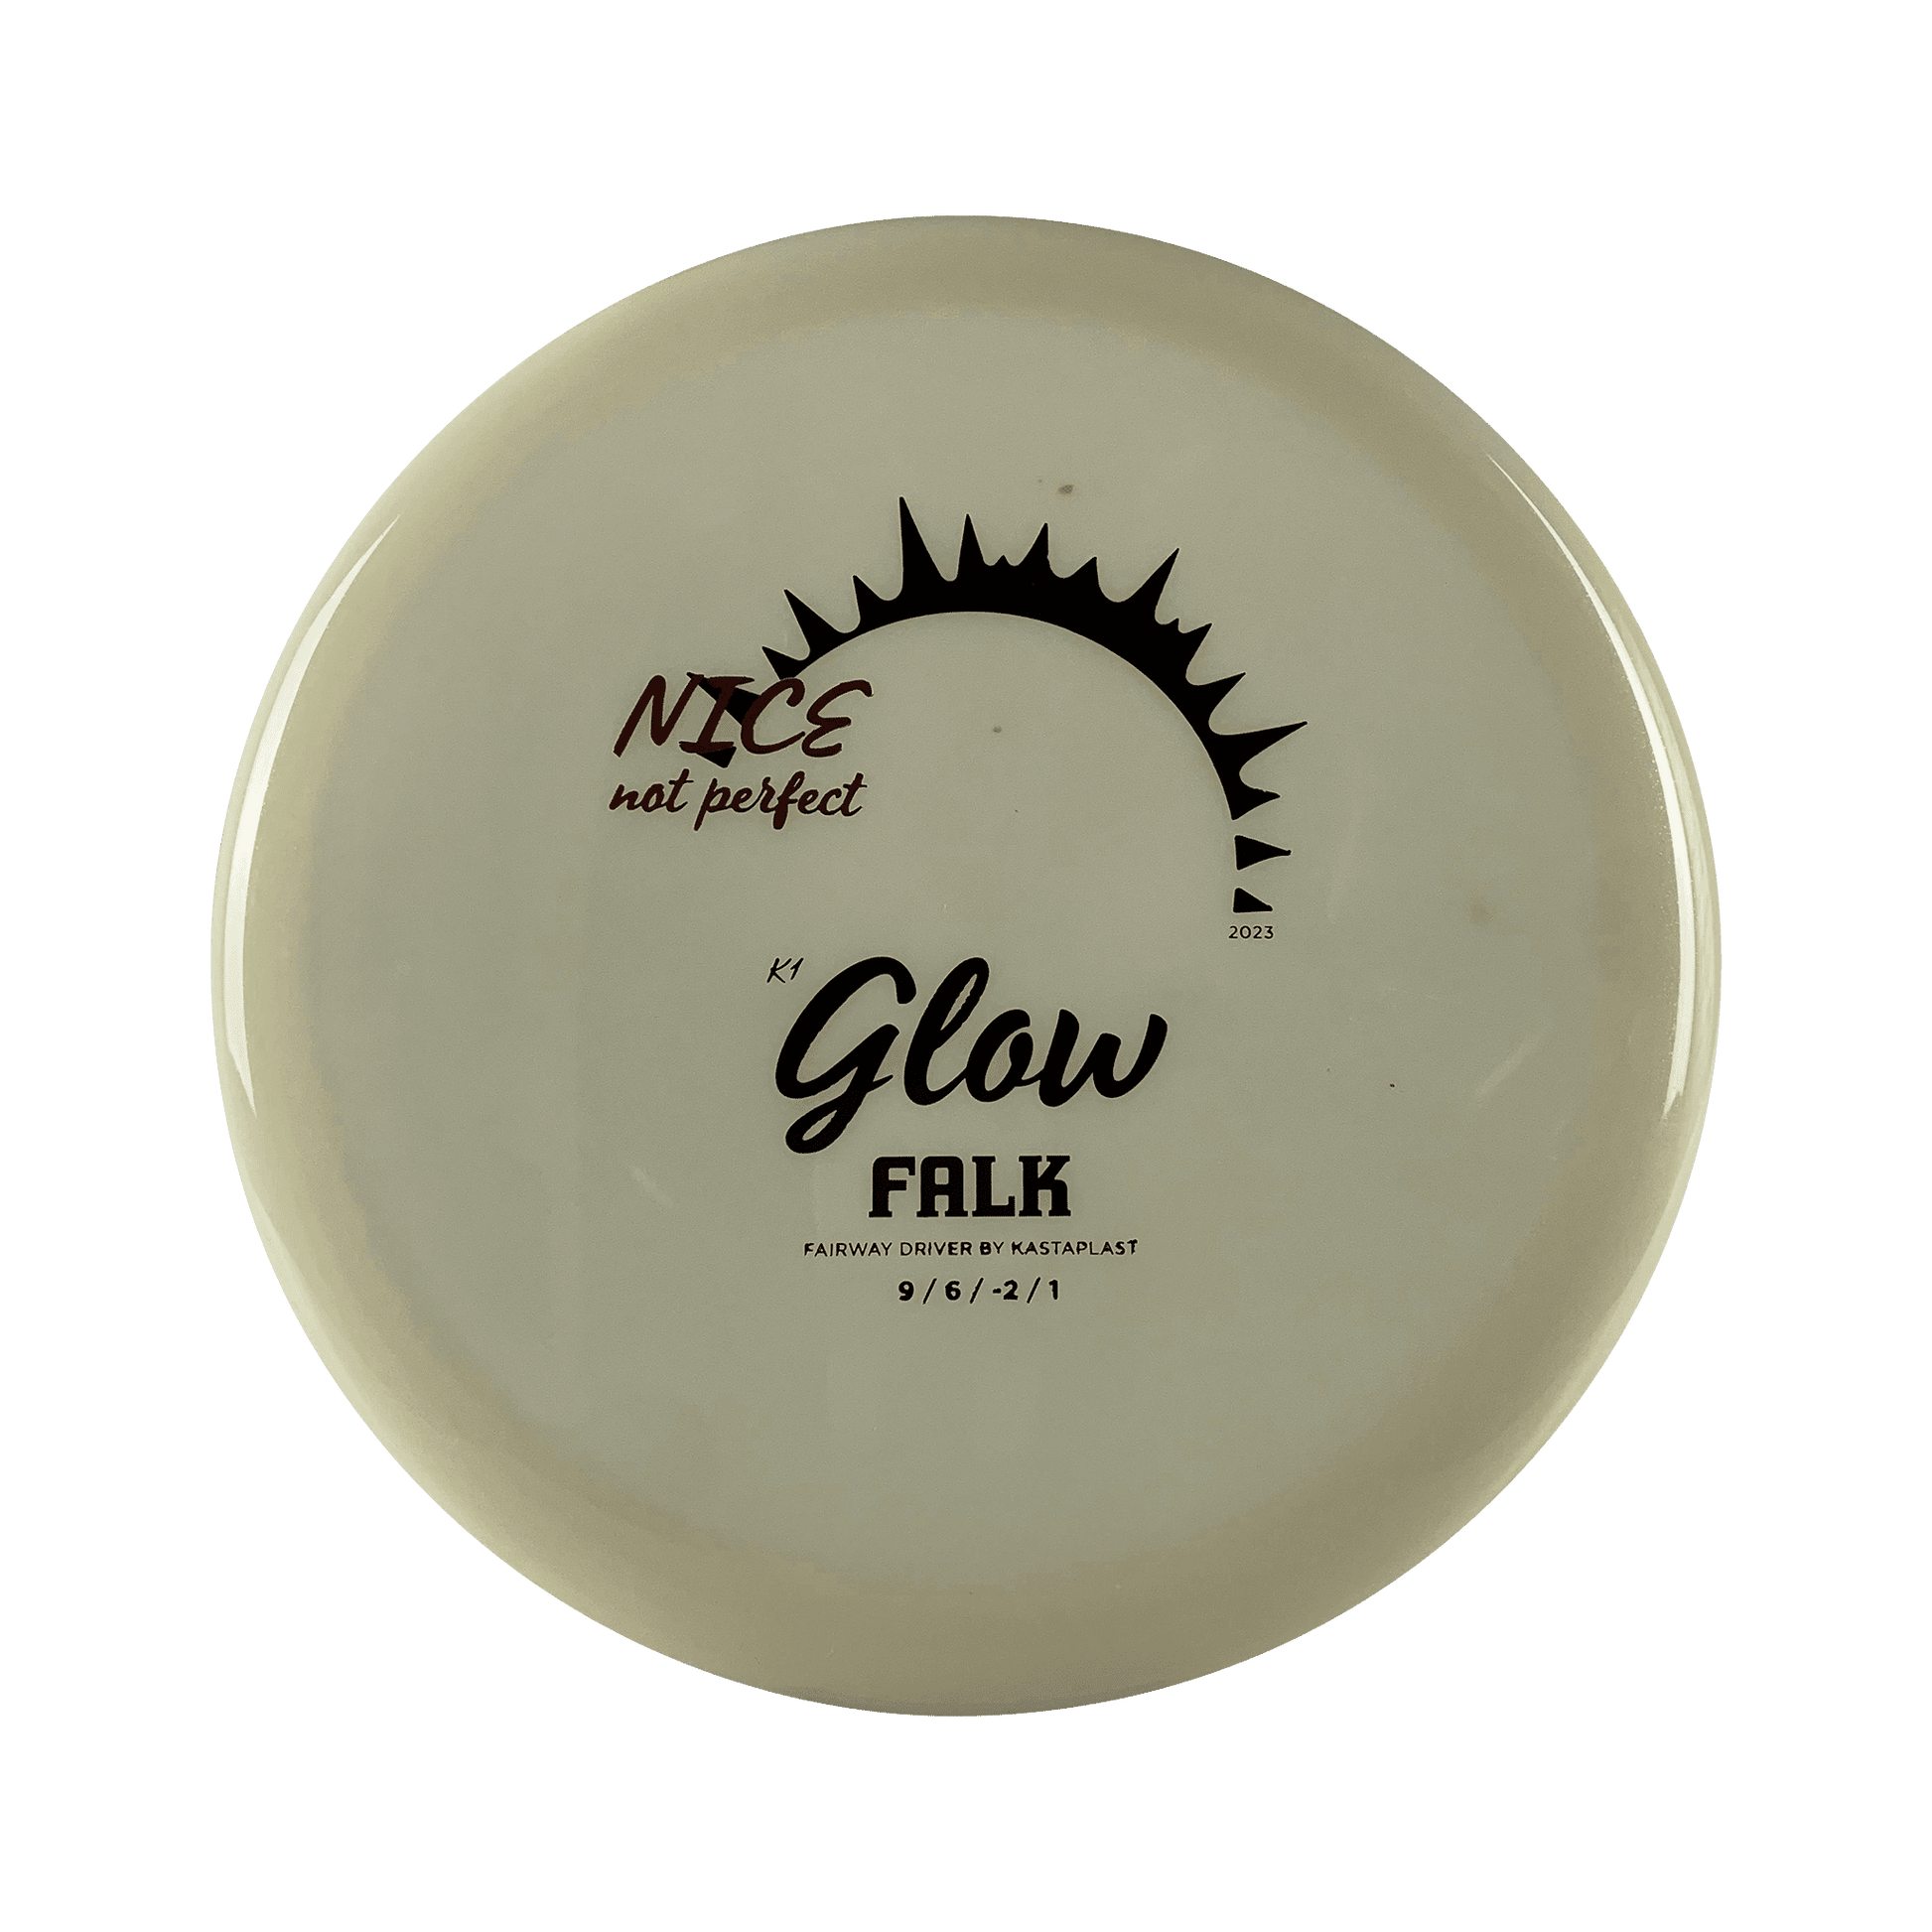 K1 Glow Falk - NICE not perfect Disc Kastaplast clear white 173 